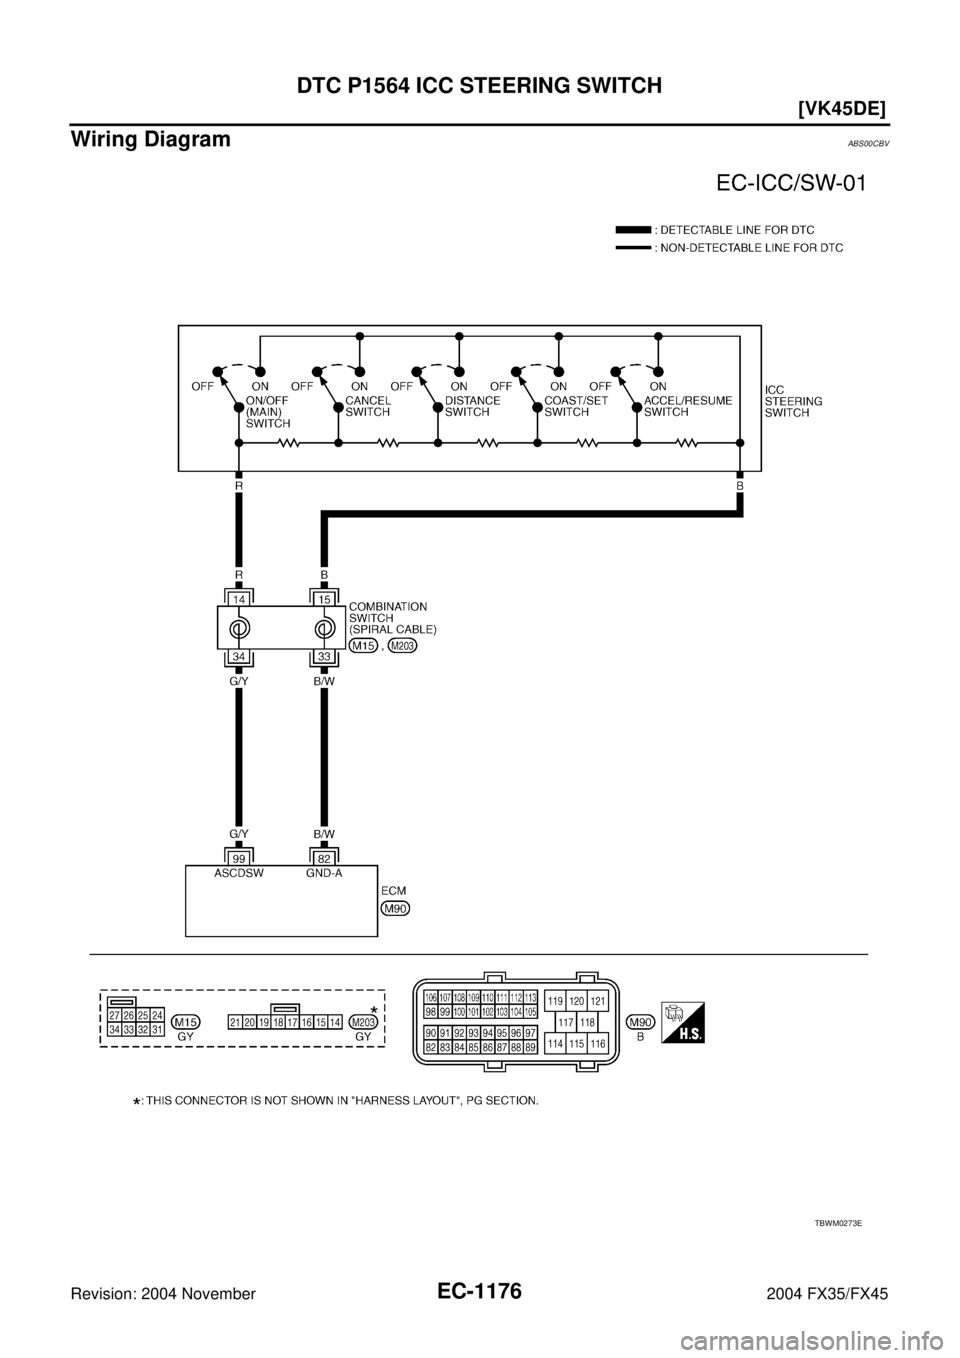 INFINITI FX35 2004  Service Manual EC-1176
[VK45DE]
DTC P1564 ICC STEERING SWITCH
Revision: 2004 November 2004 FX35/FX45
Wiring DiagramABS00CBV
TBWM0273E 